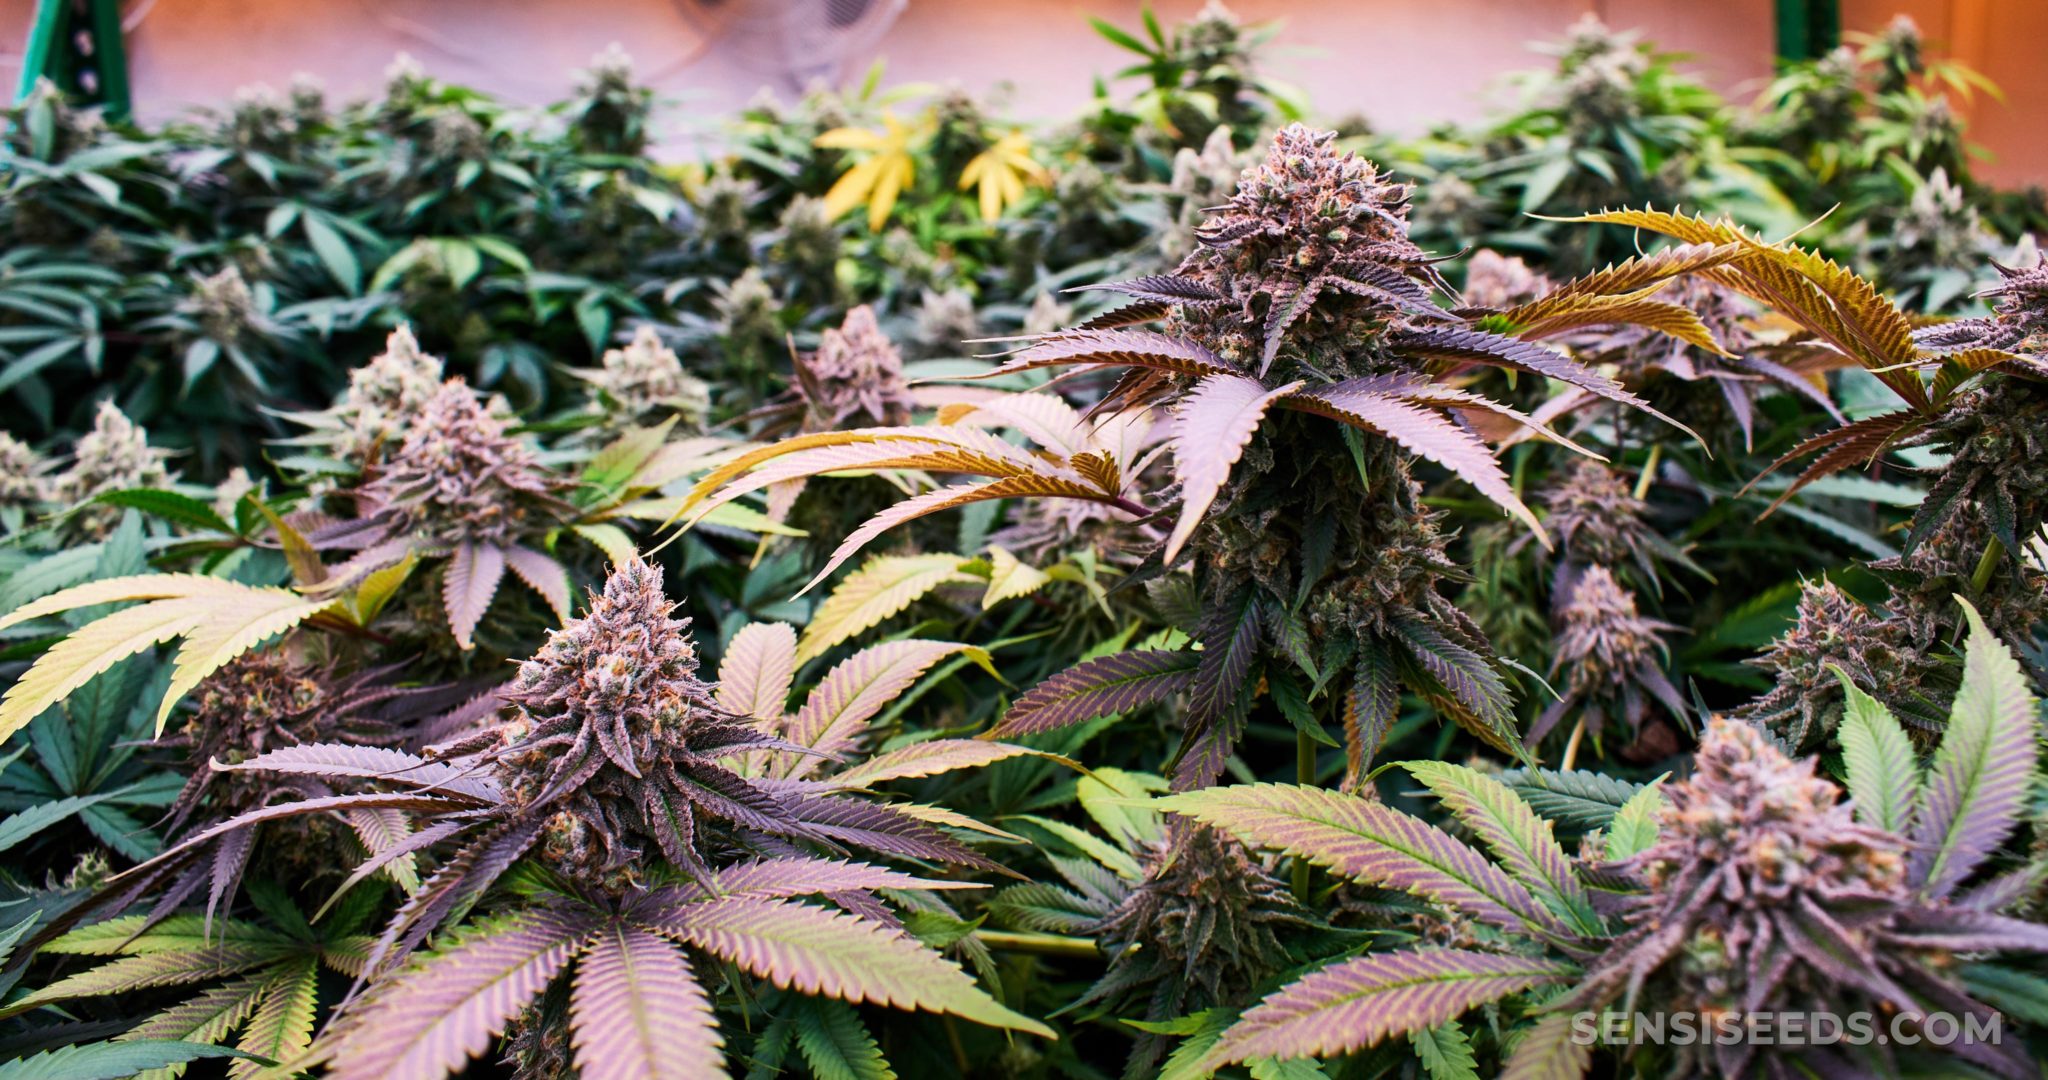 11 Best Indica Cannabis Strains Sensi Seeds